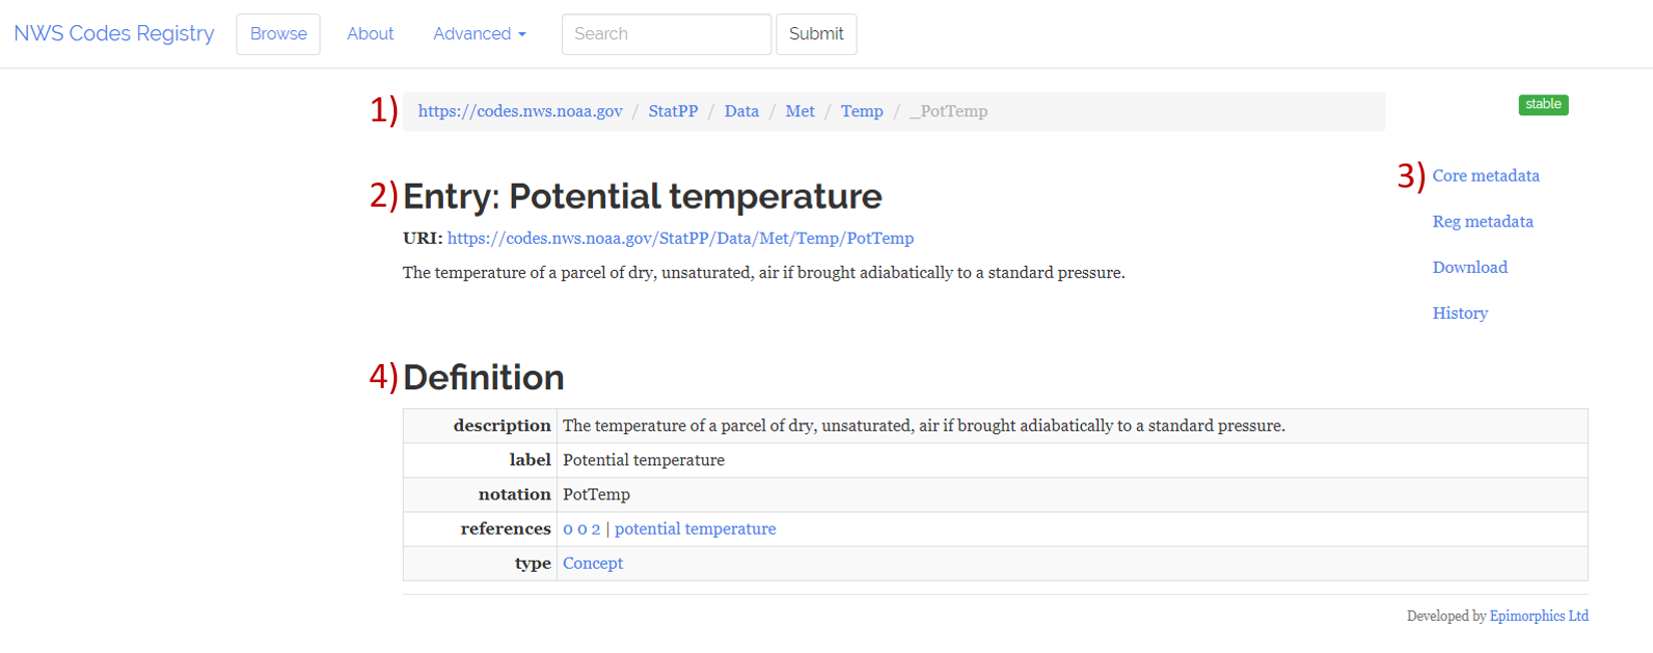 Figure 2: Registry GUI display for "Potential Temperature" under /StatPP/Data/Met/Temp